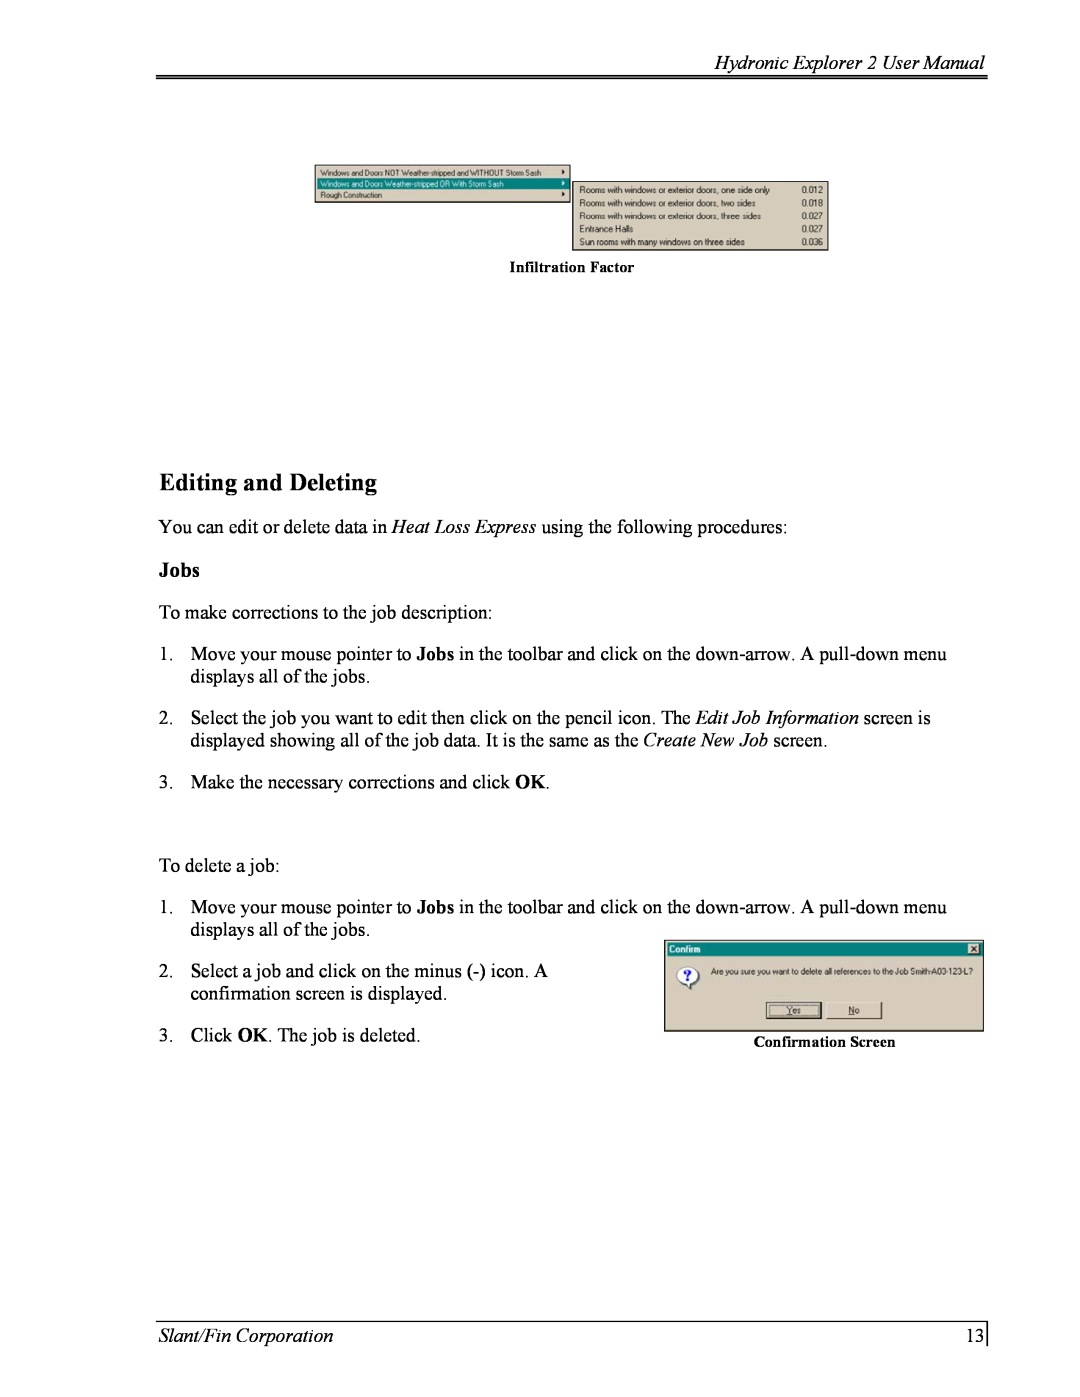 Slant/Fin Hydronic Explorer 2 user manual Editing and Deleting, Jobs, Slant/Fin Corporation 